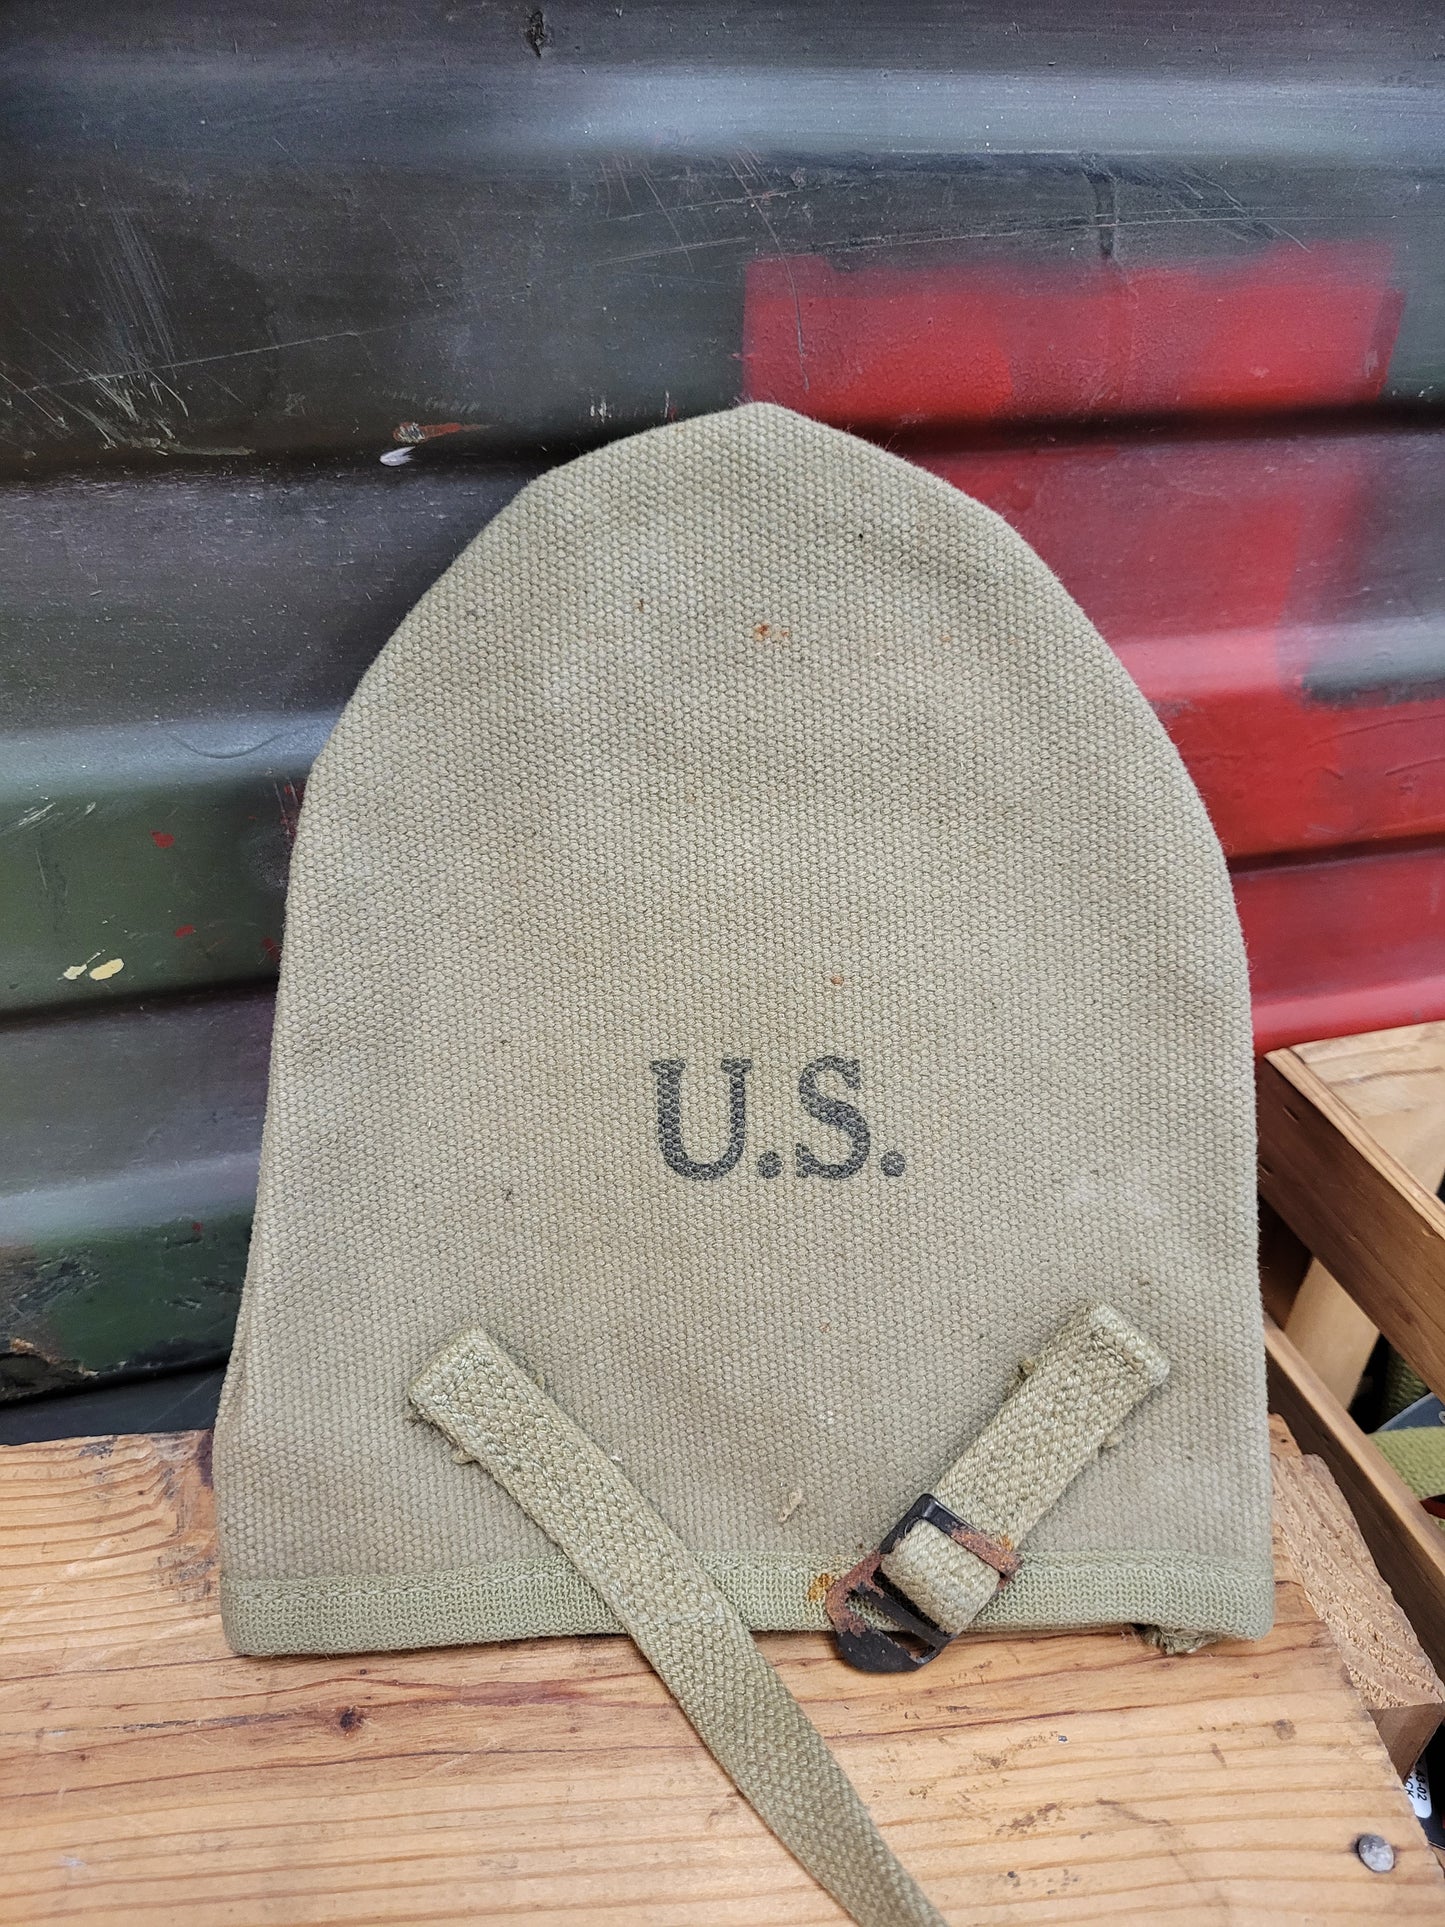 Original U.S. WW II Shovel Carrier